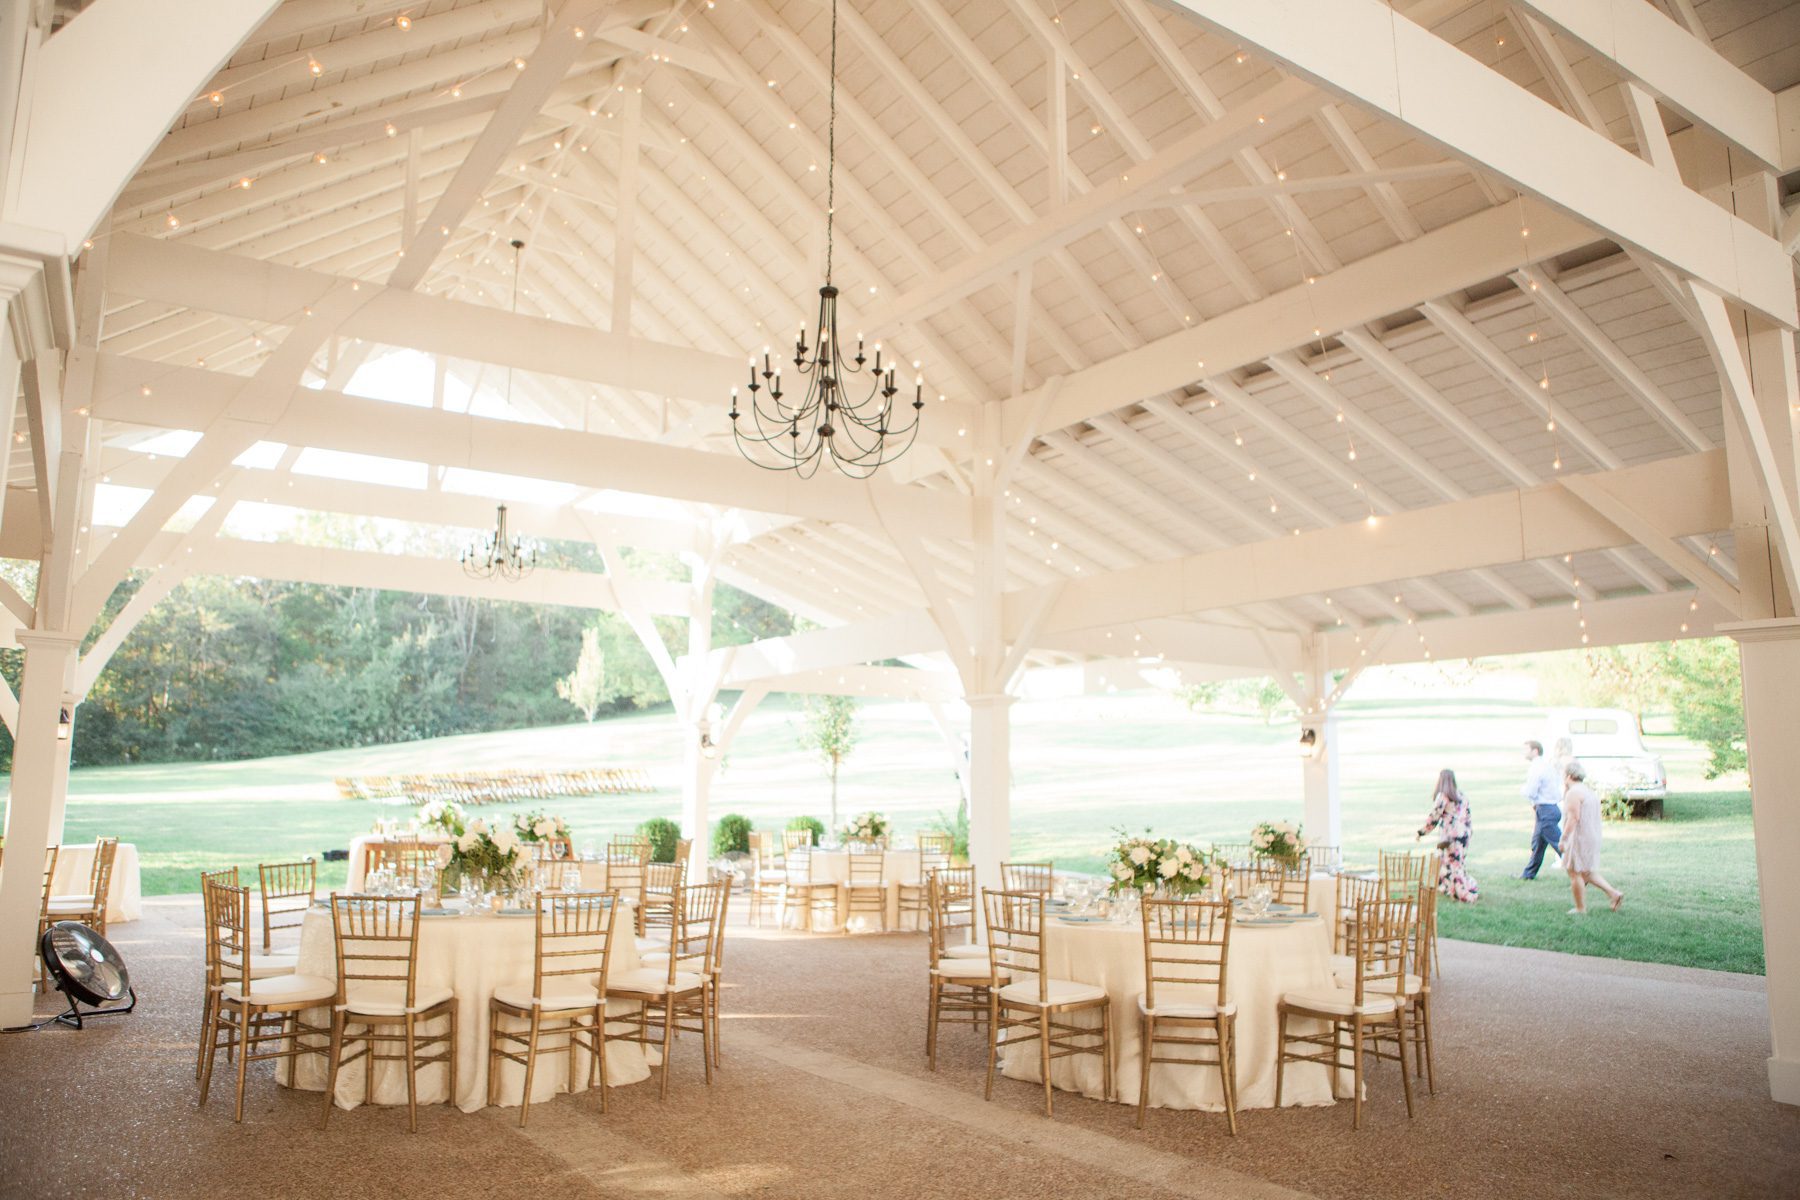 Wedding pavilion set for reception. Wedding photography at Cedarwood Weddings and Estate in Nashville, TN photography by Krista Lee Photography